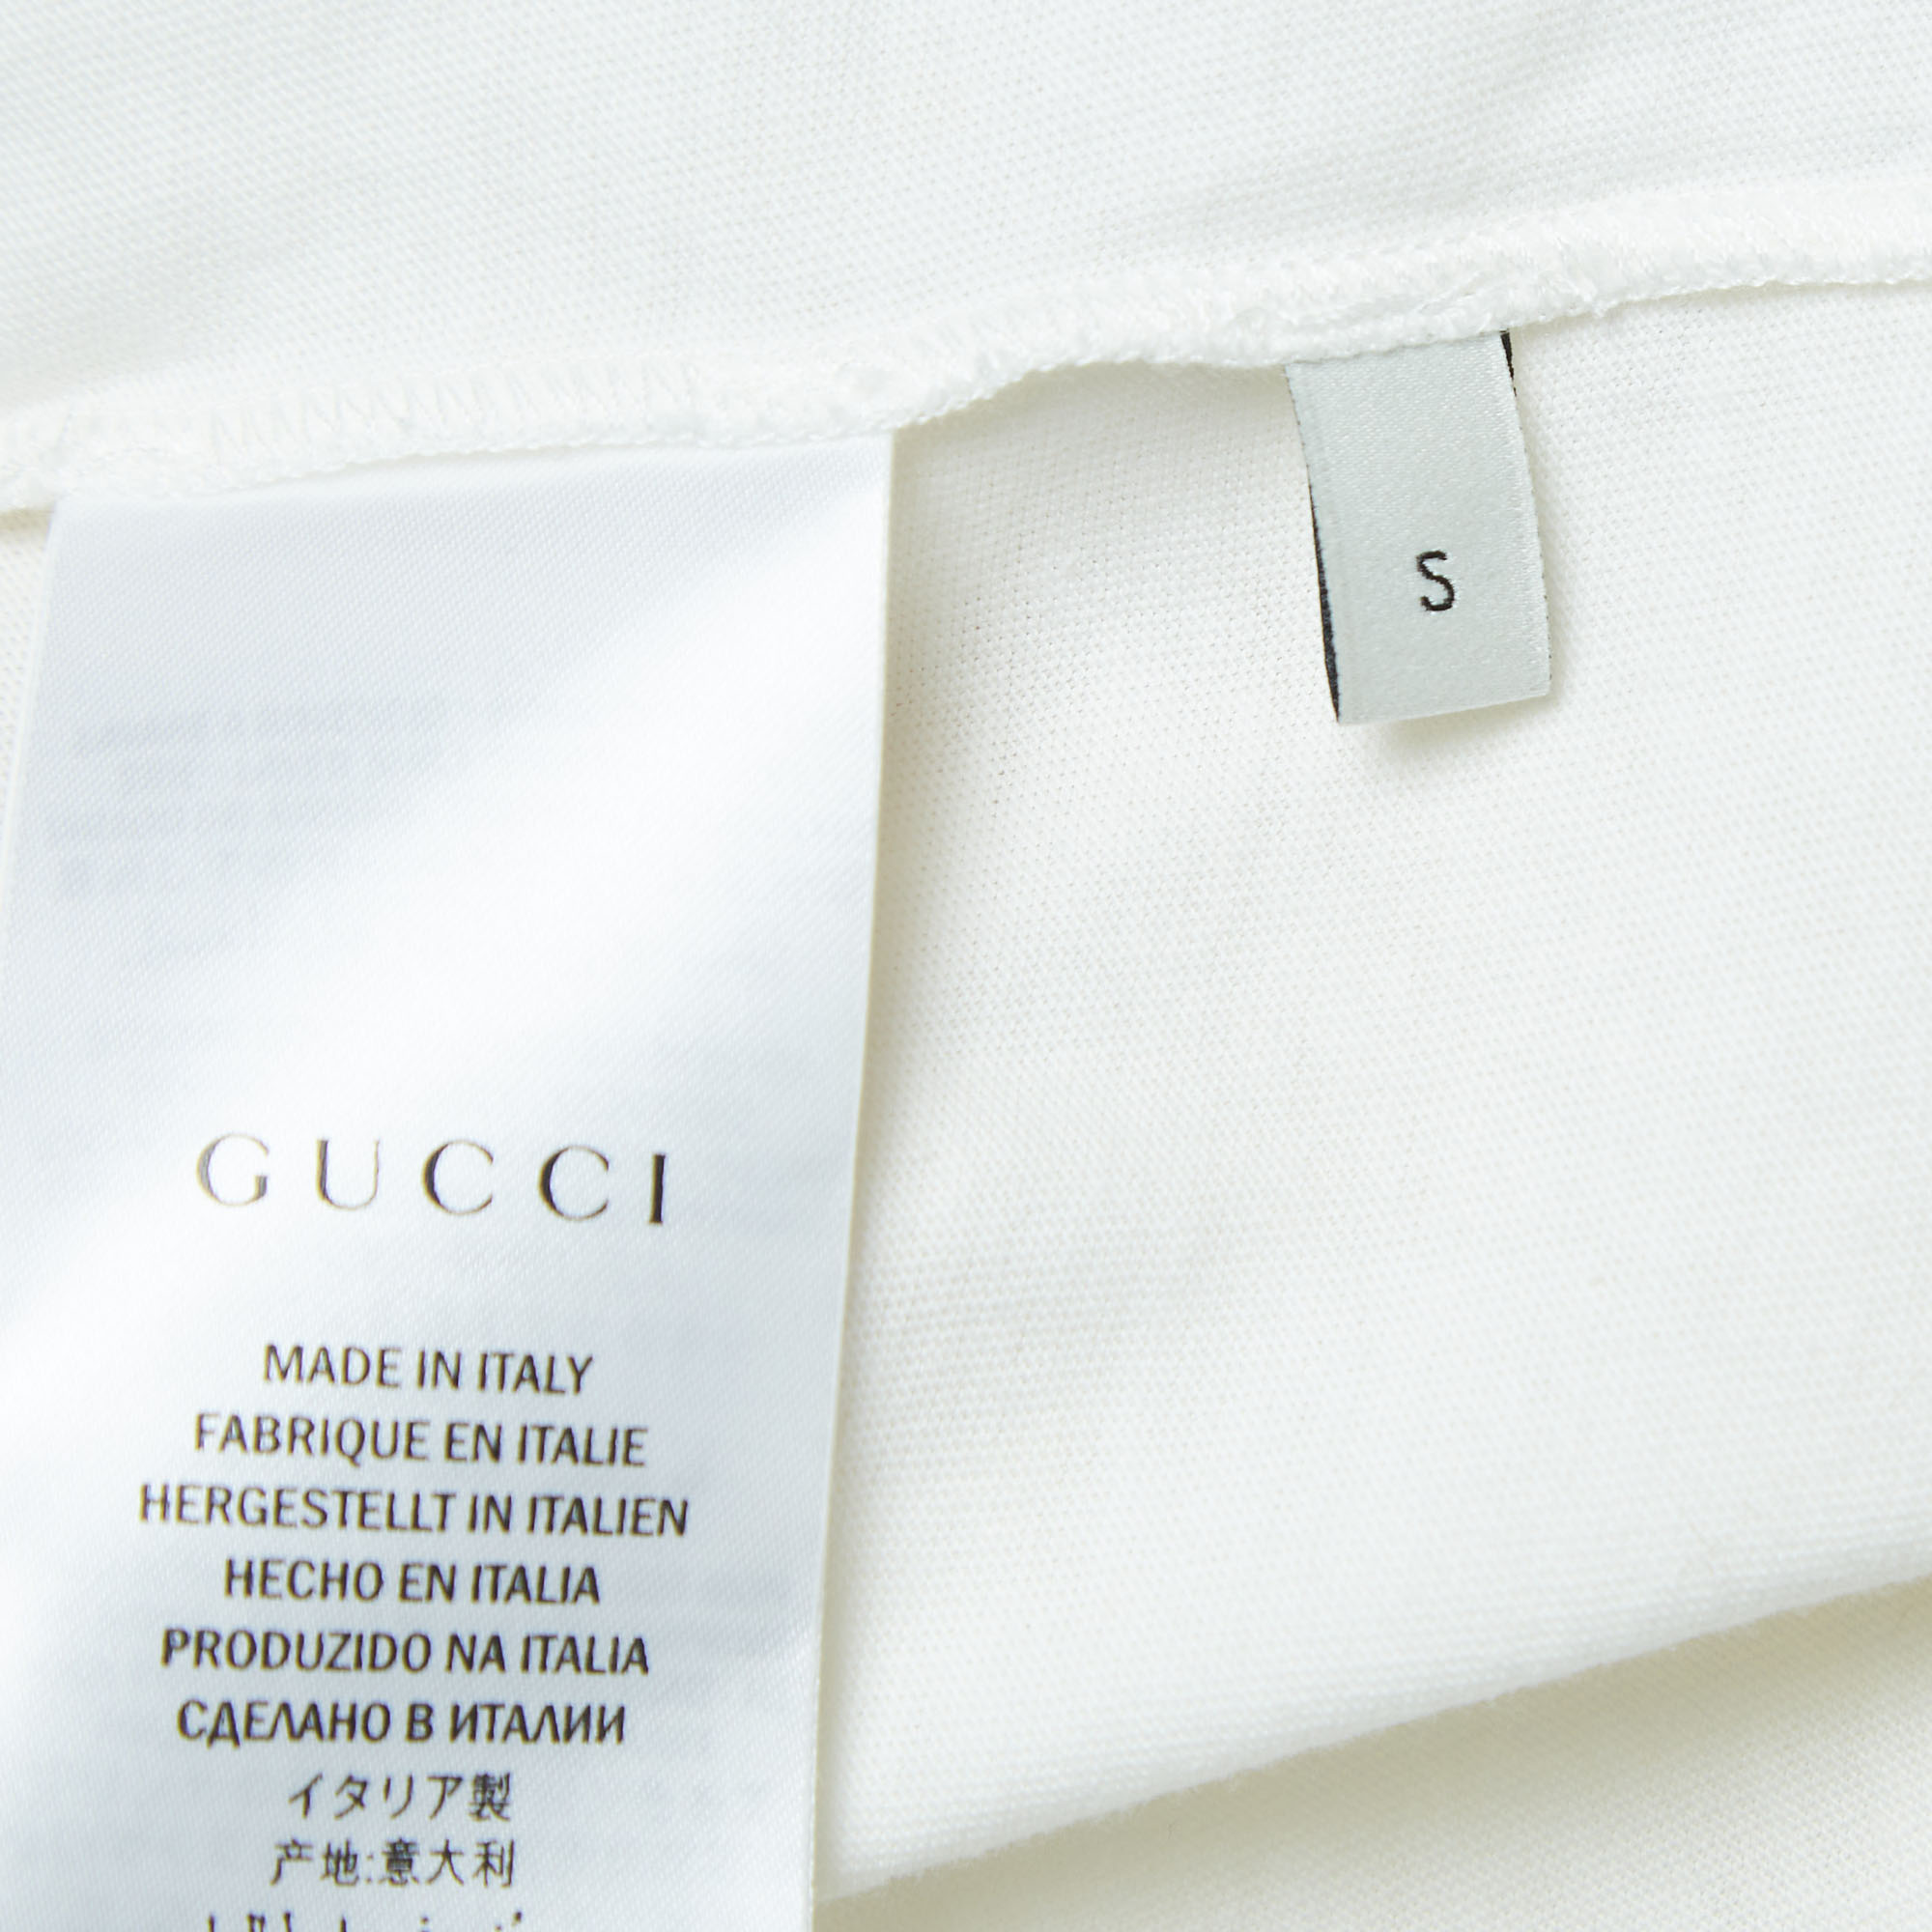 Gucci White Graphic Print Cotton T-Shirt S